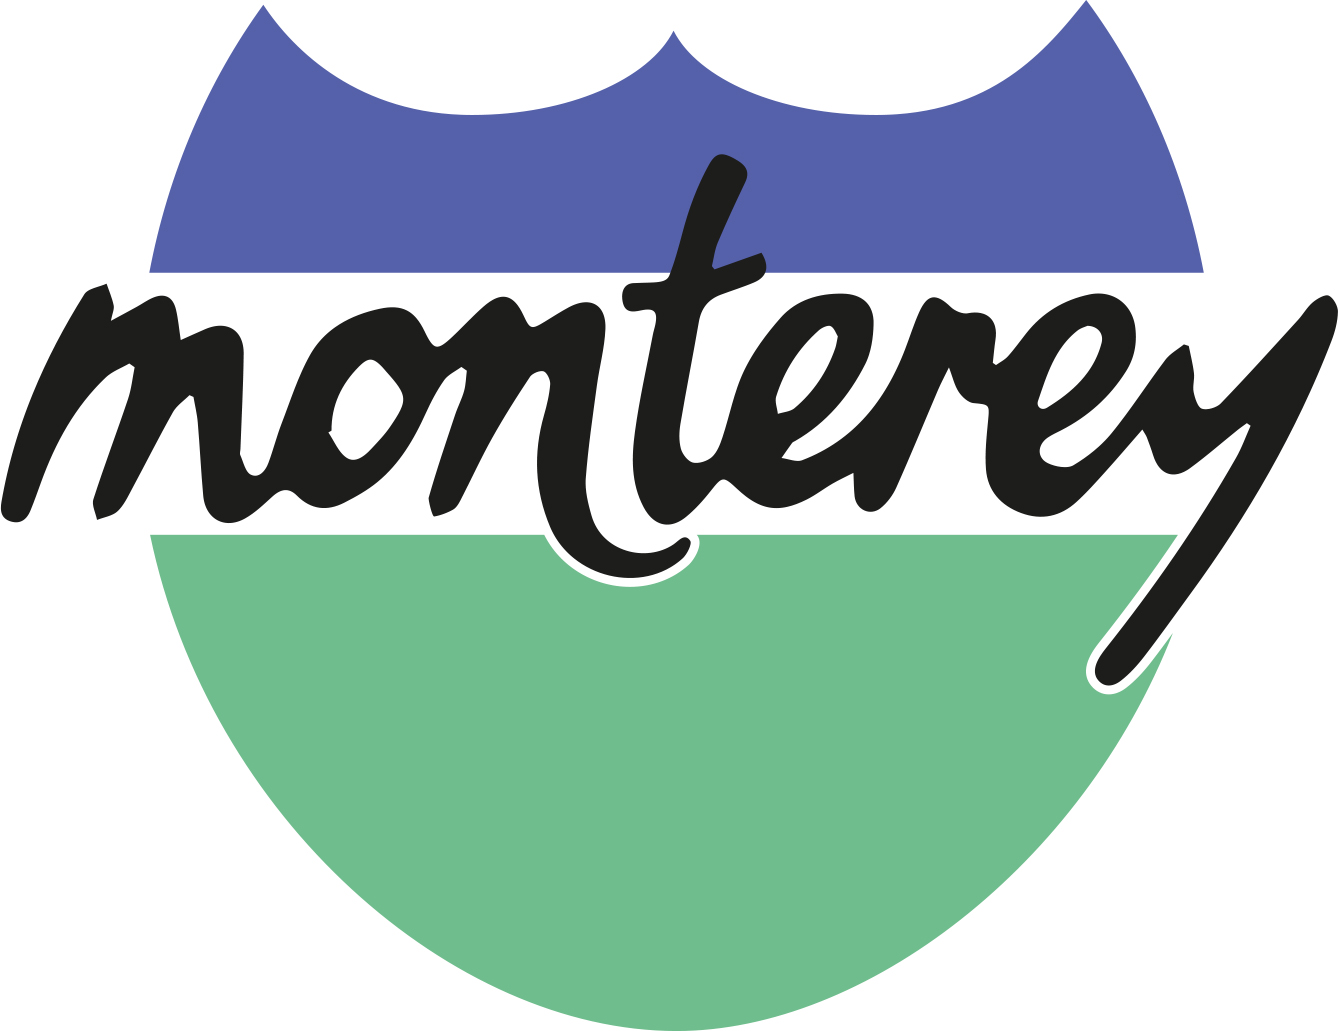 Logo Monterey